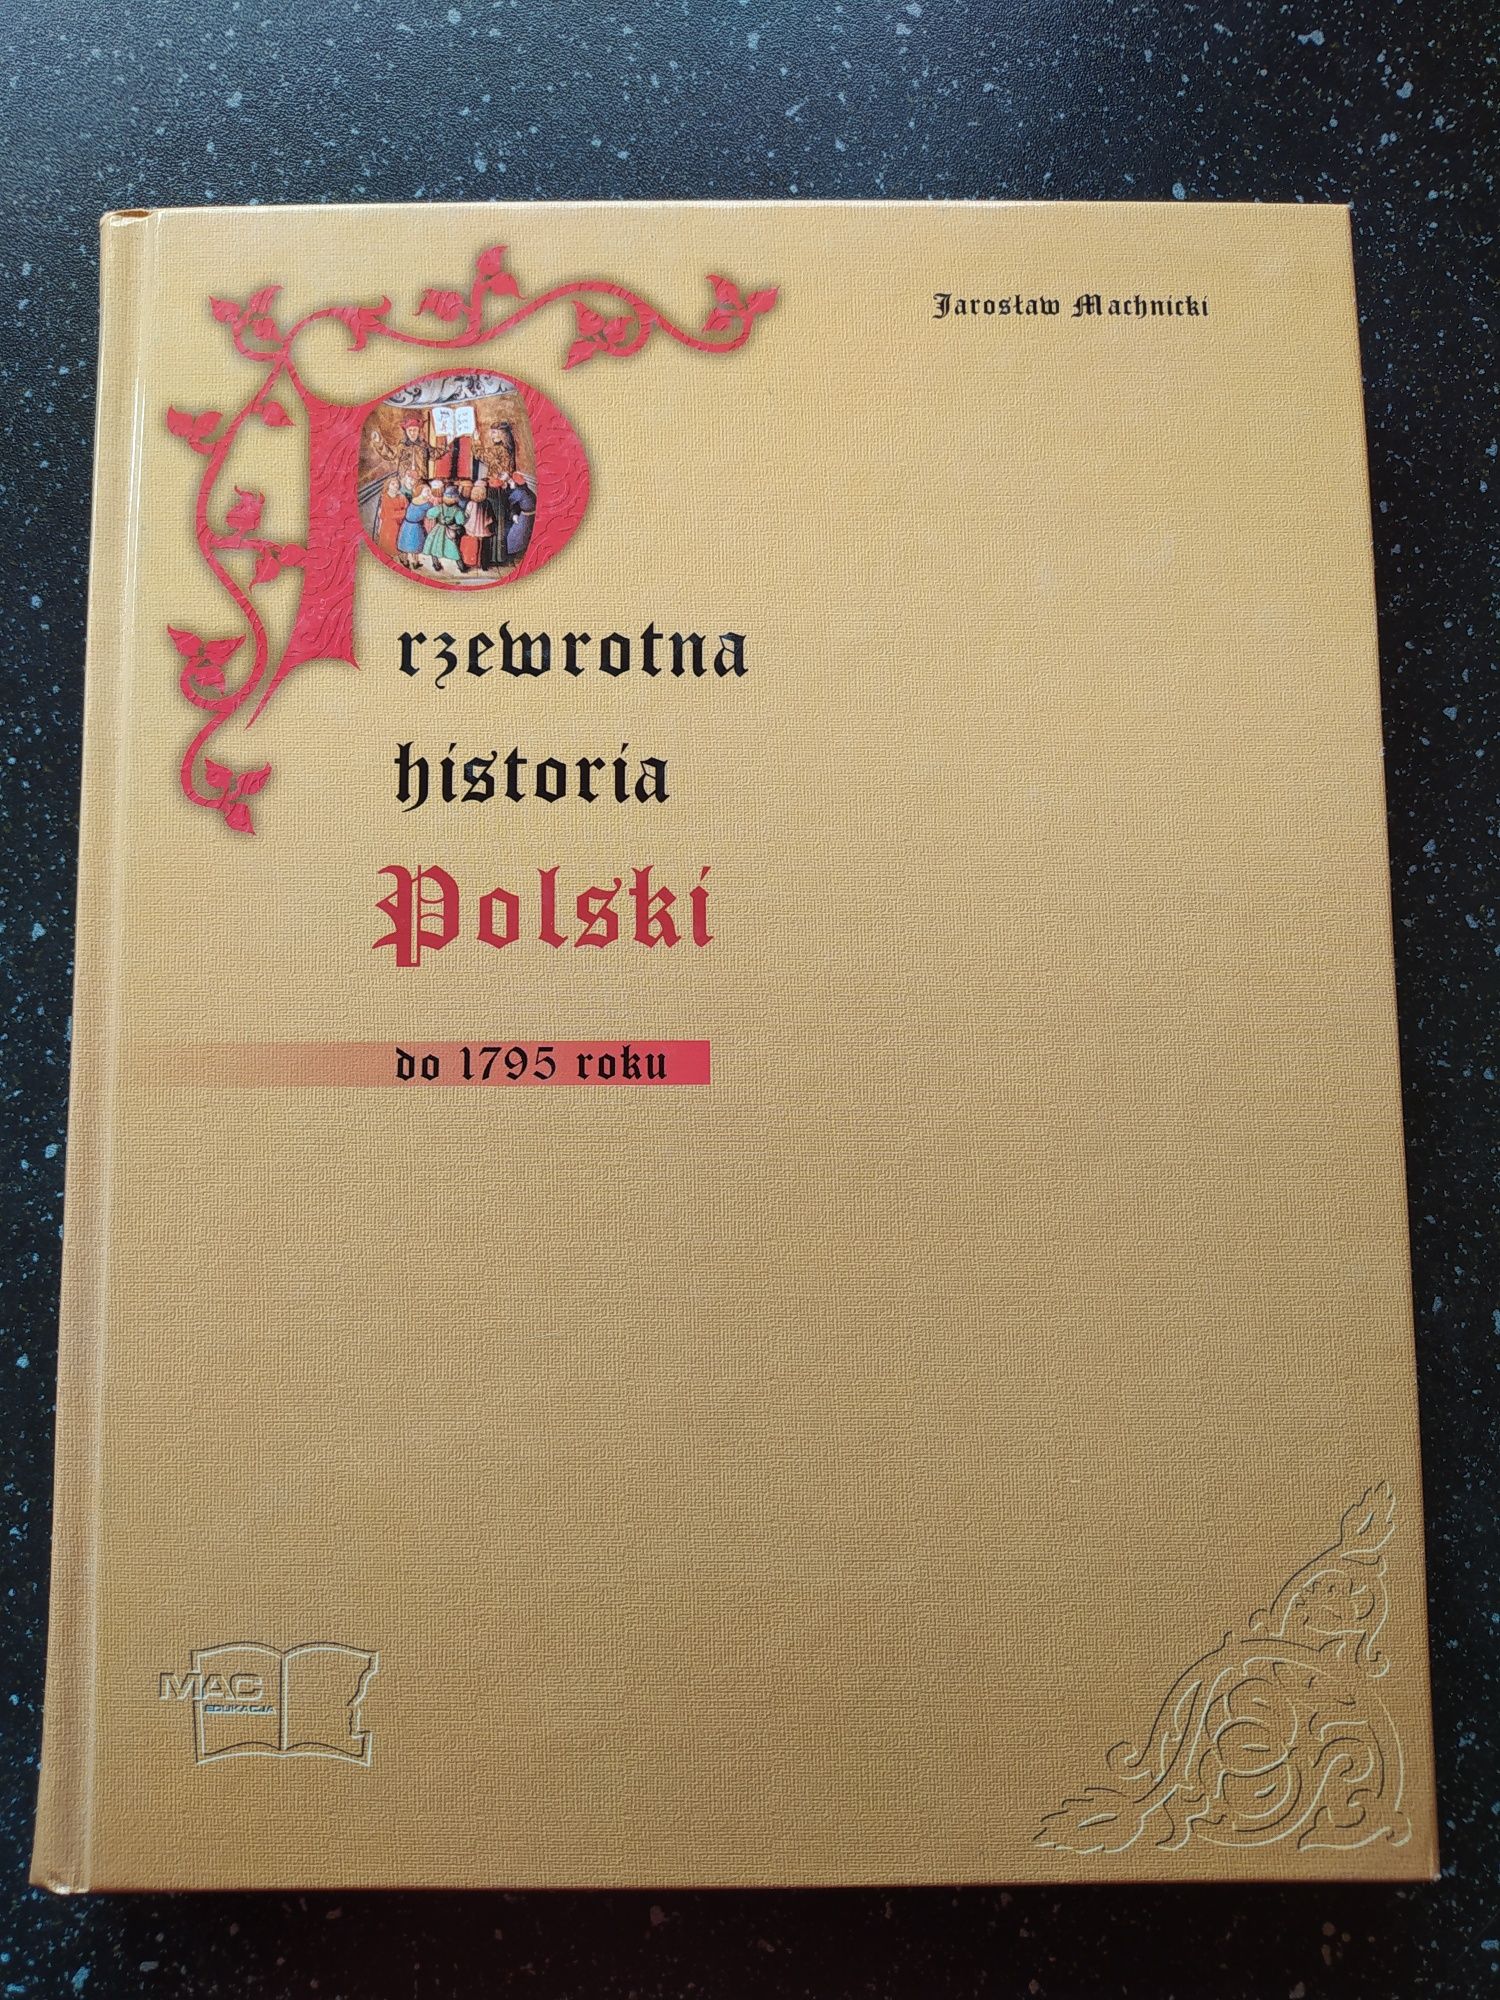 Przewrotna historia Polski do 1795 J. Machnicki